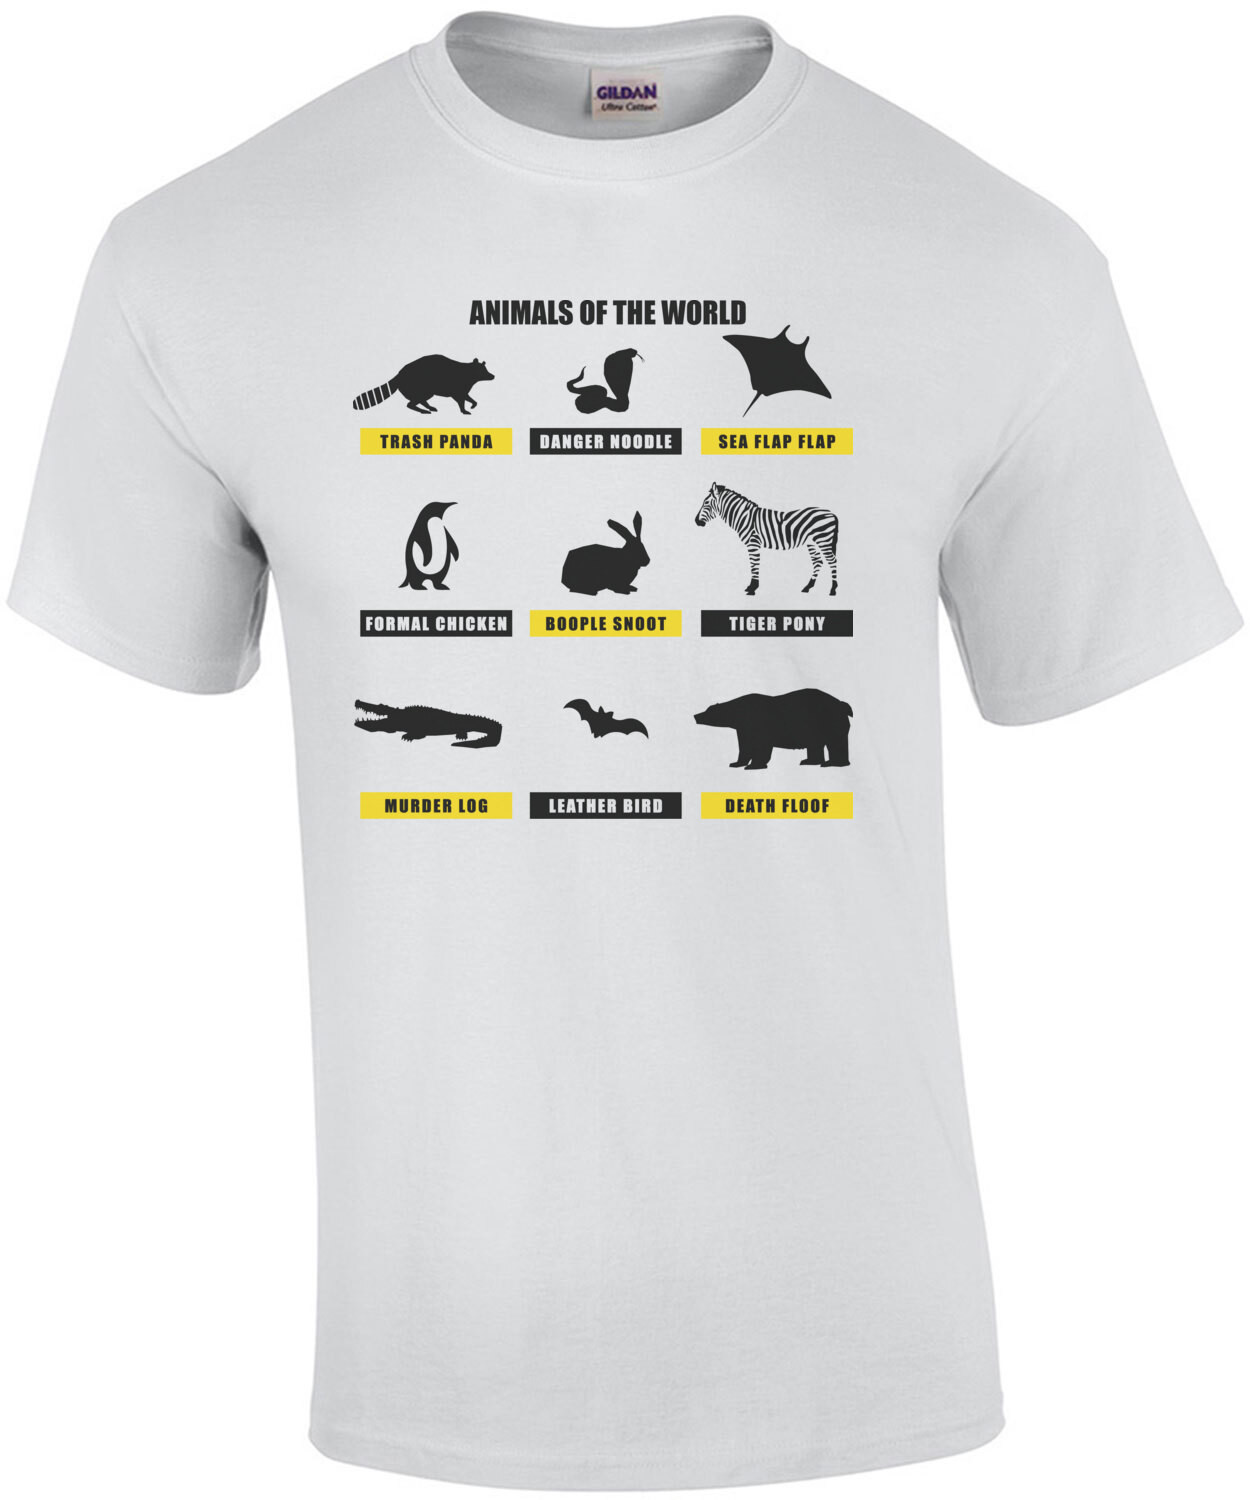 Animals of the world - funny animals t-shirt